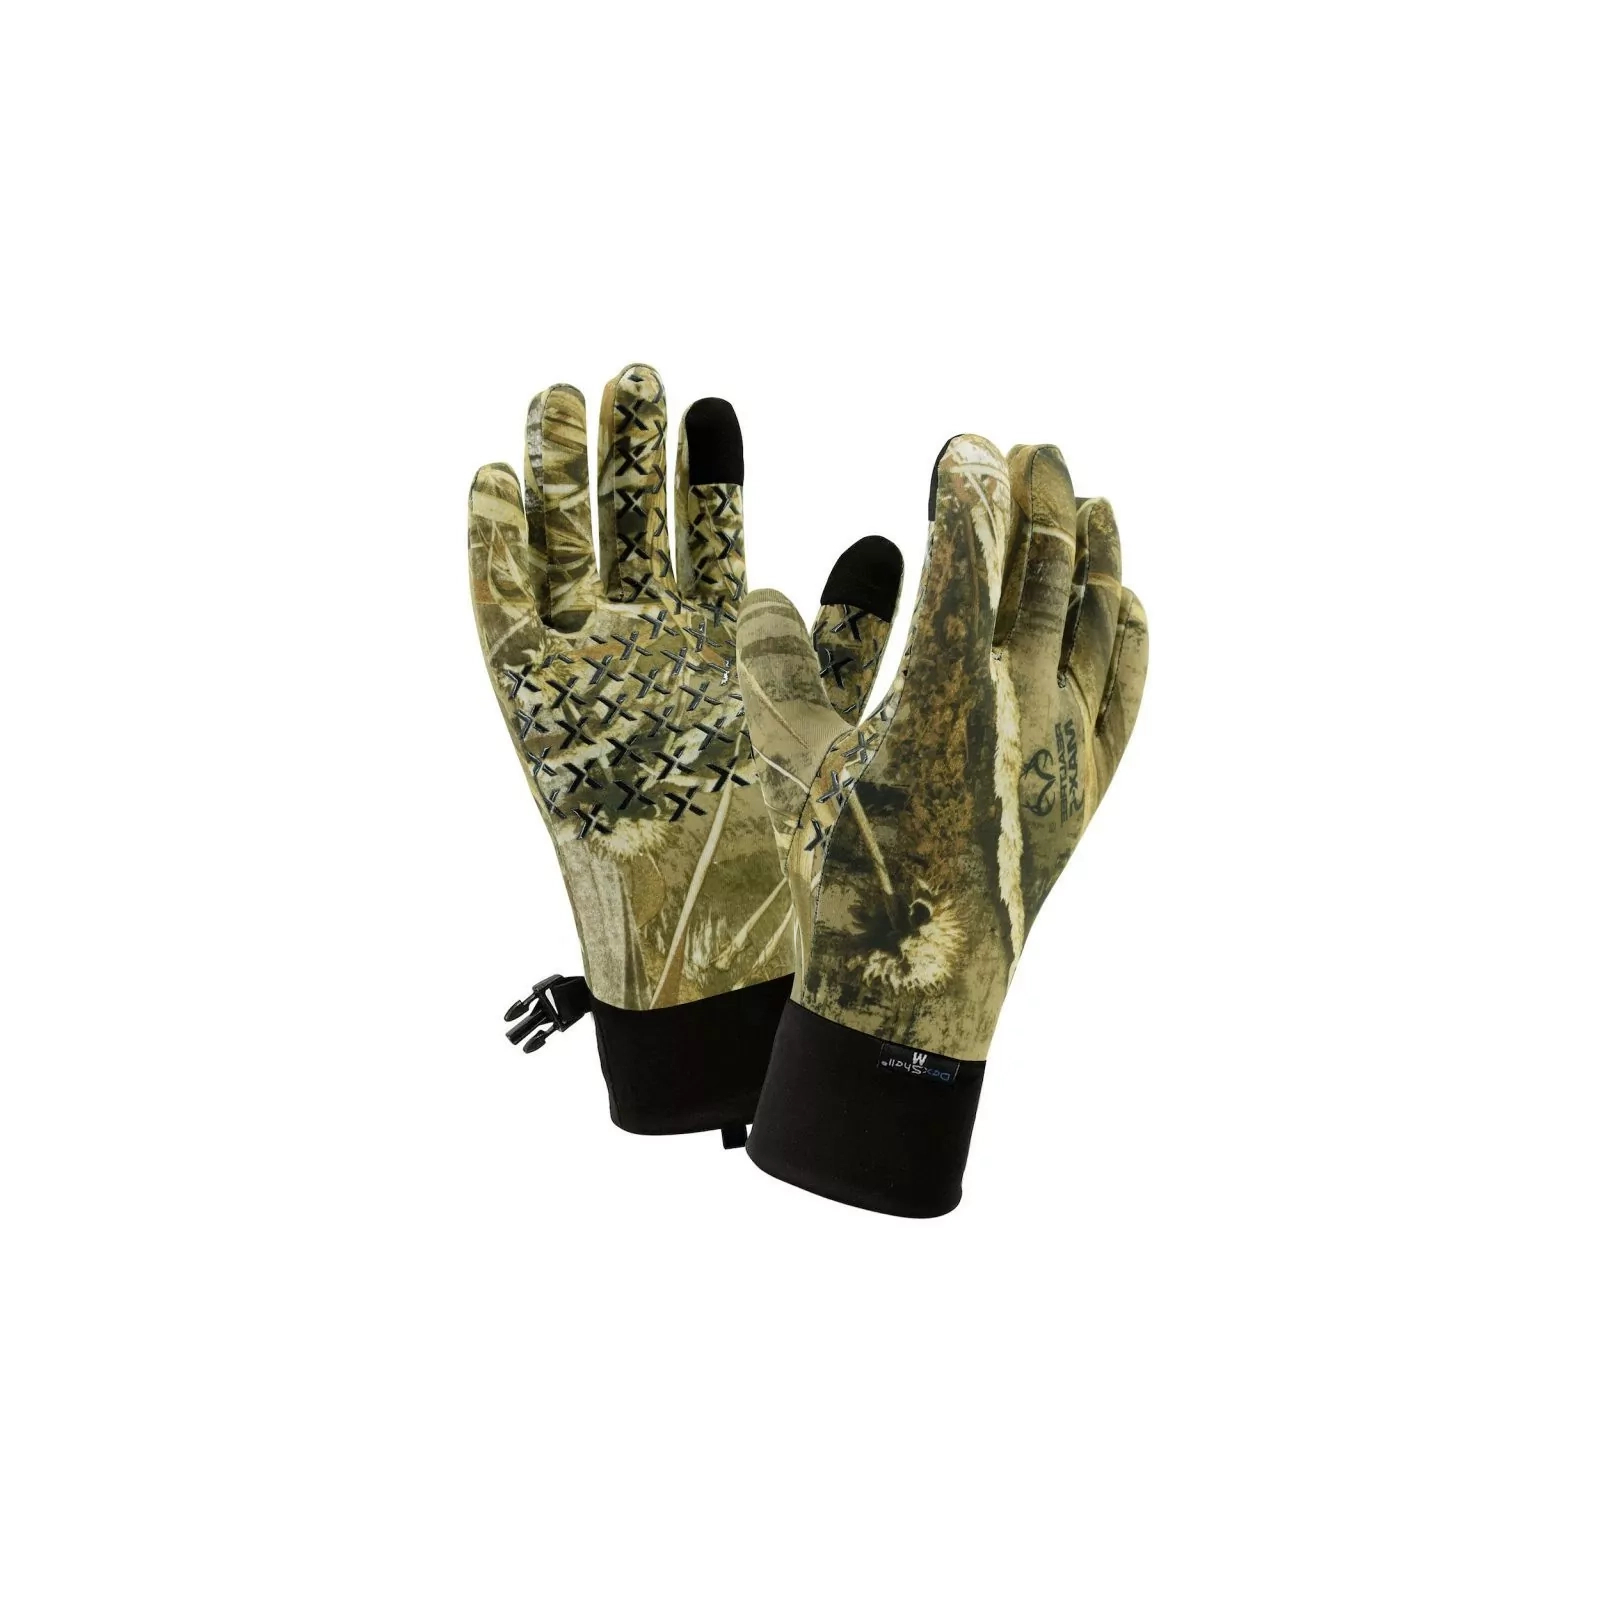 Водонепроницаемые перчатки Dexshell StretchFit Gloves Black S (DG90906BLKS)